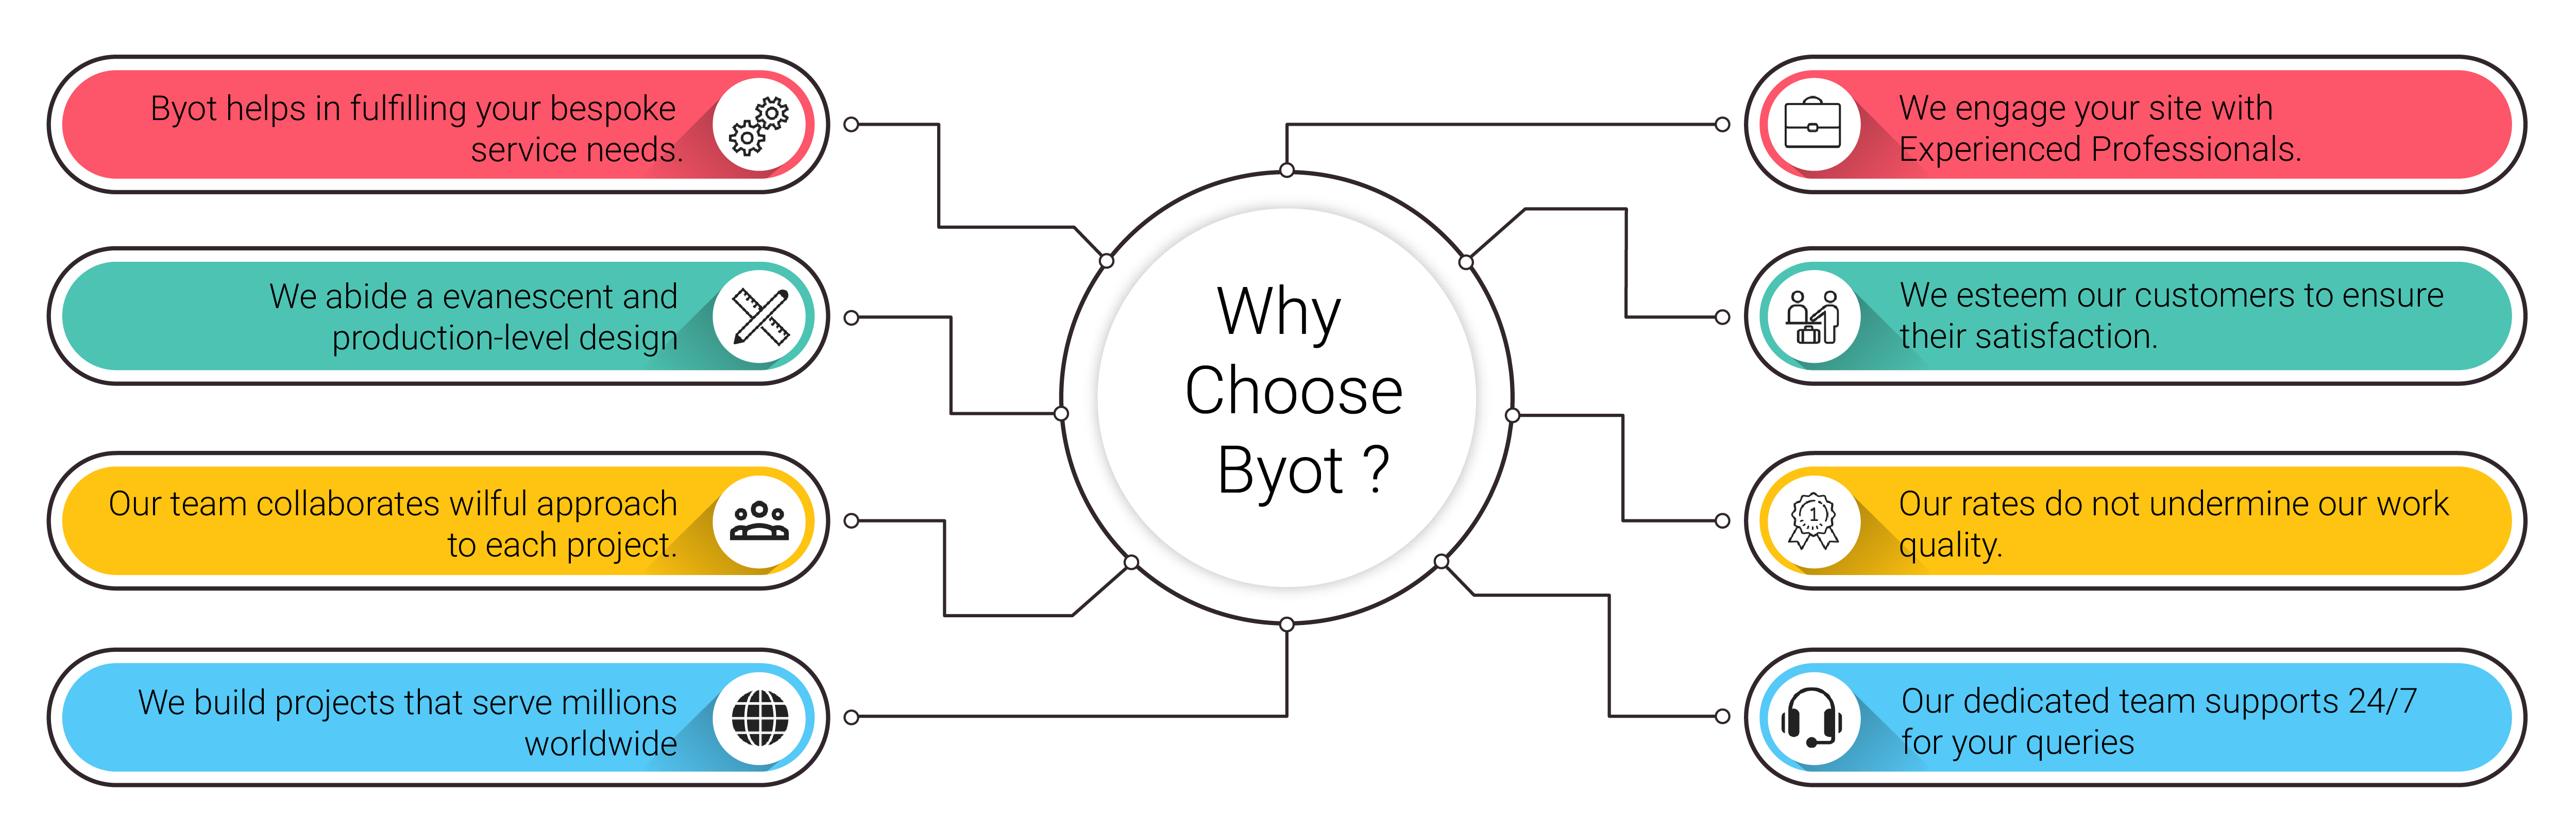 Why Choose Byot